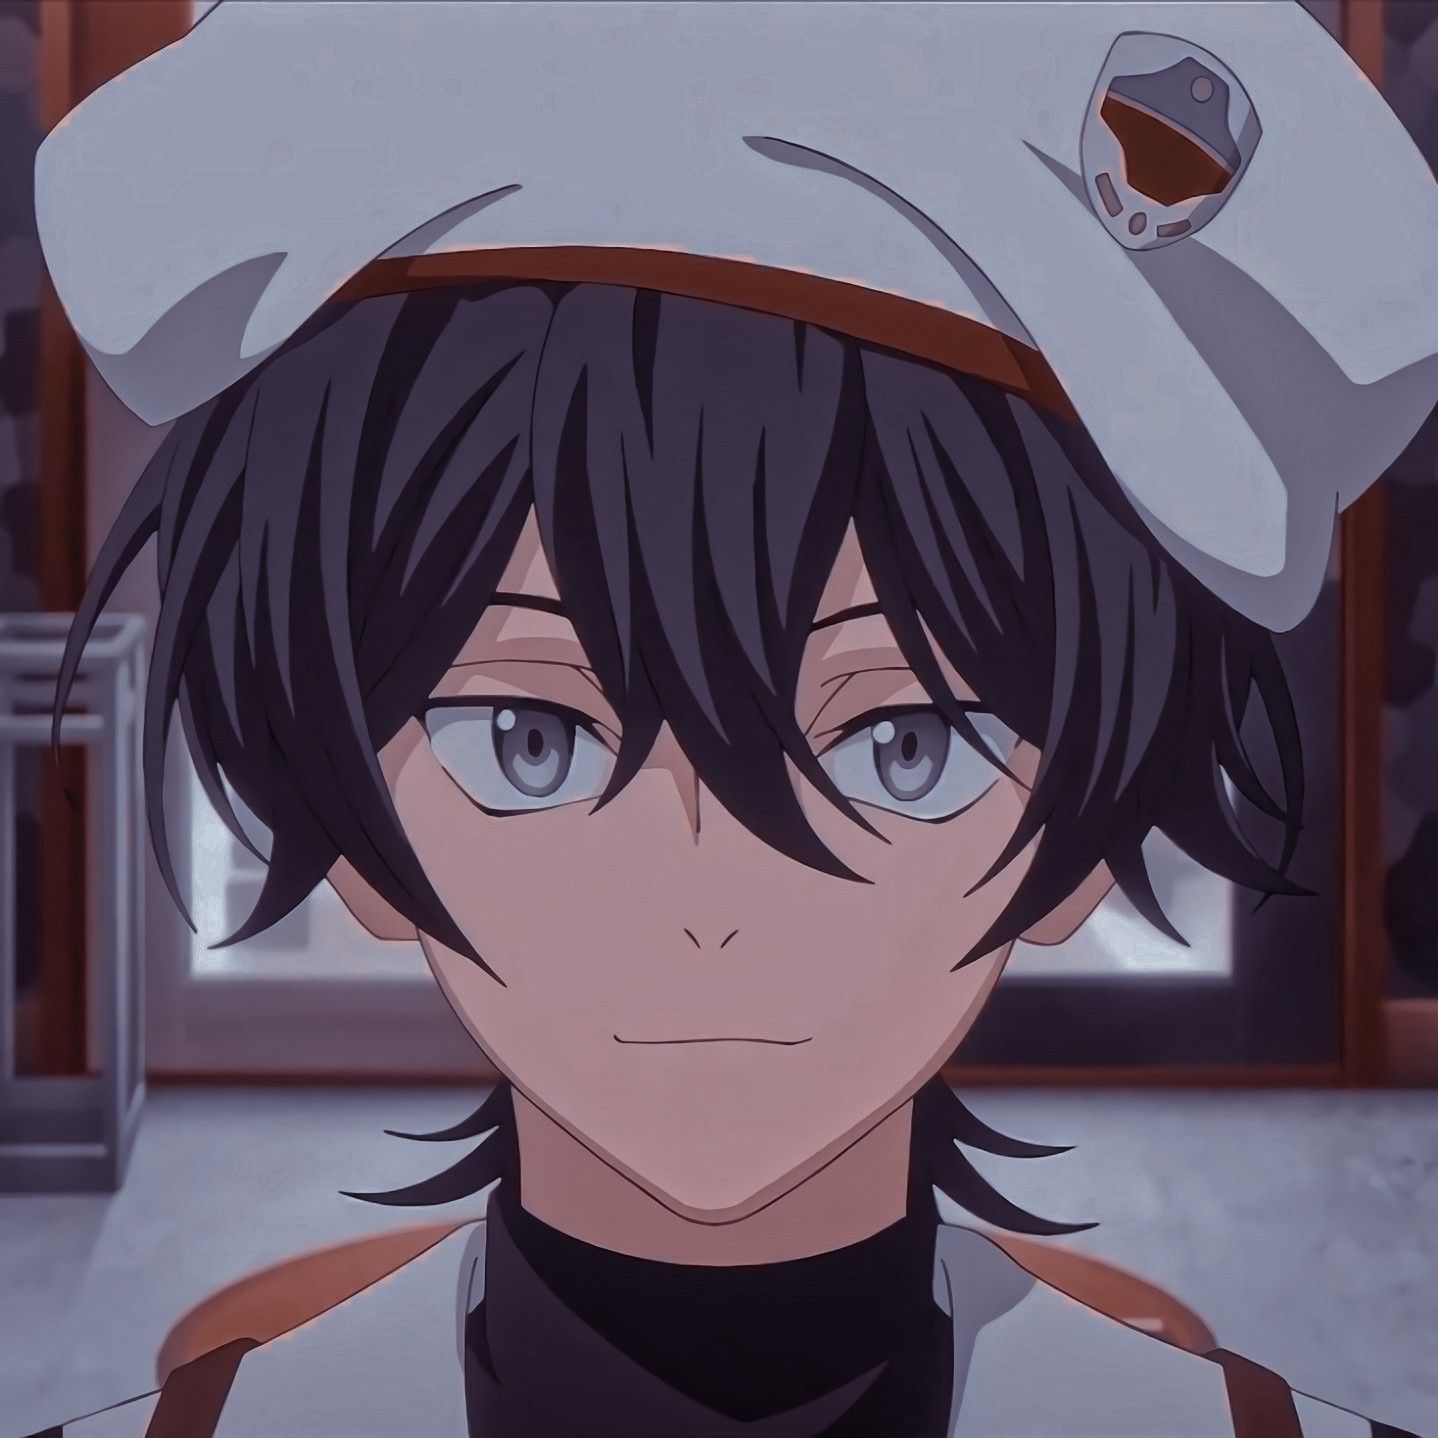 Aesthetic Anime Boy Icon Wallpaper Free Aesthetic Anime Boy Icon Background